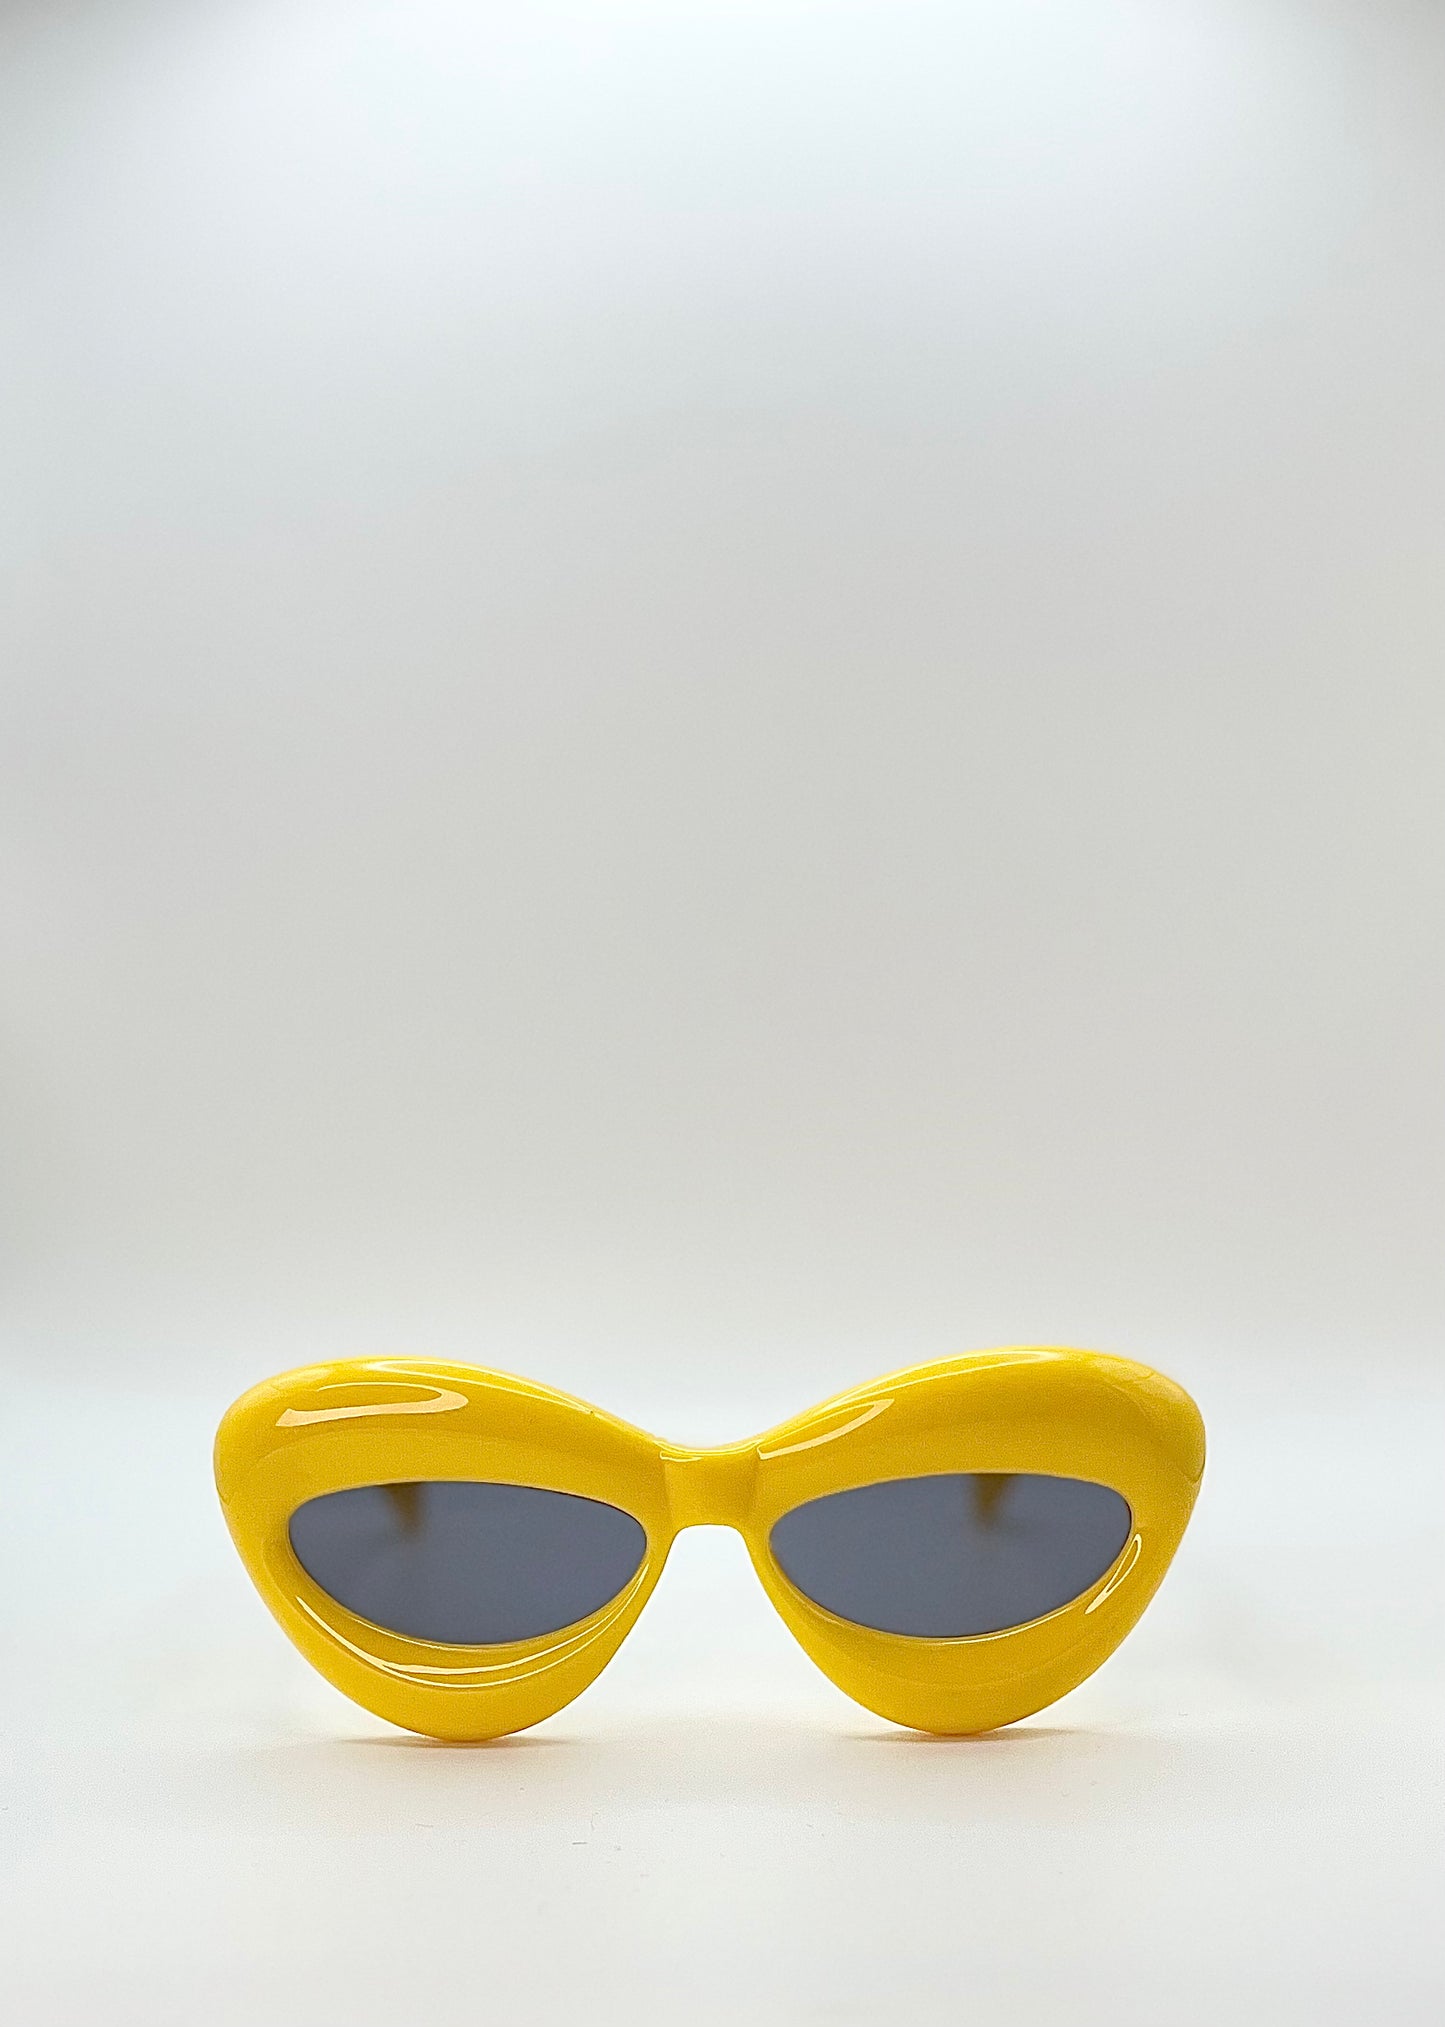 Exclusive Girl Sunglasses